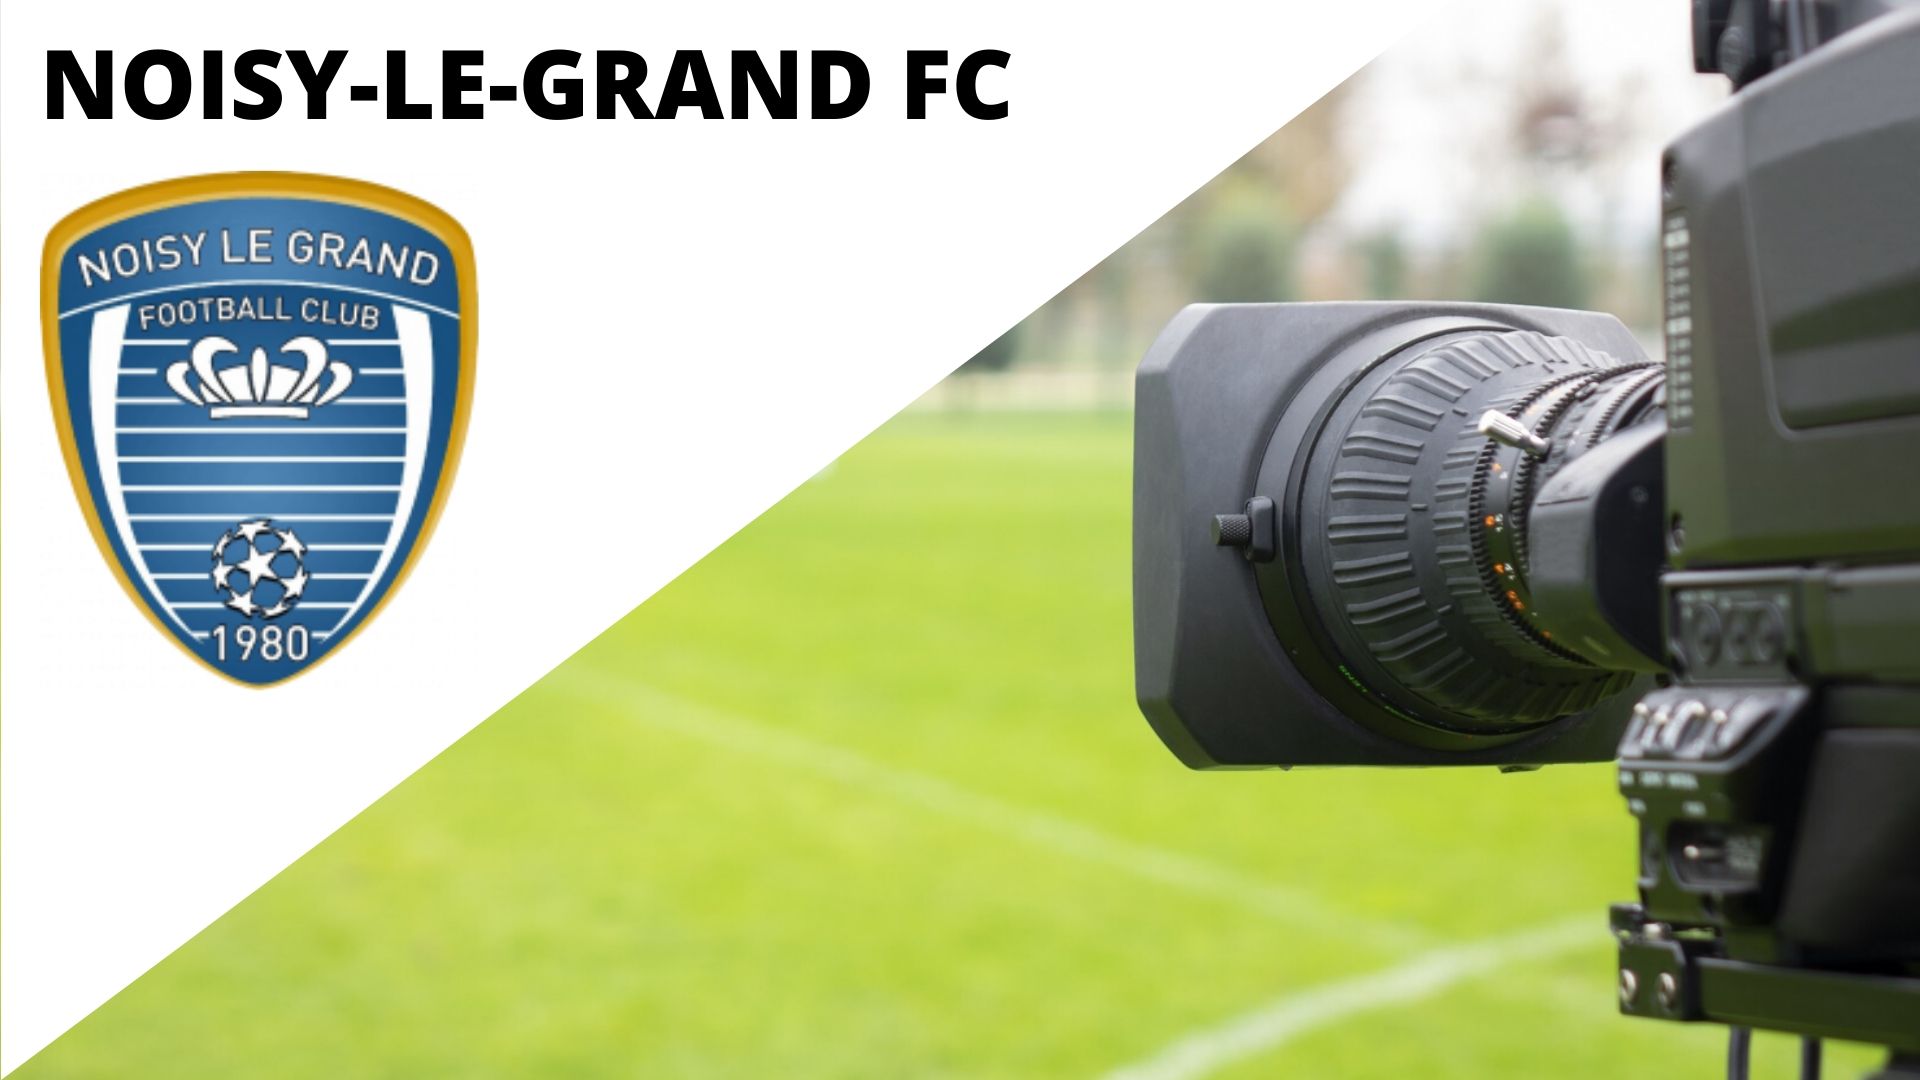 NOISY-LE-GRAND FC (93)